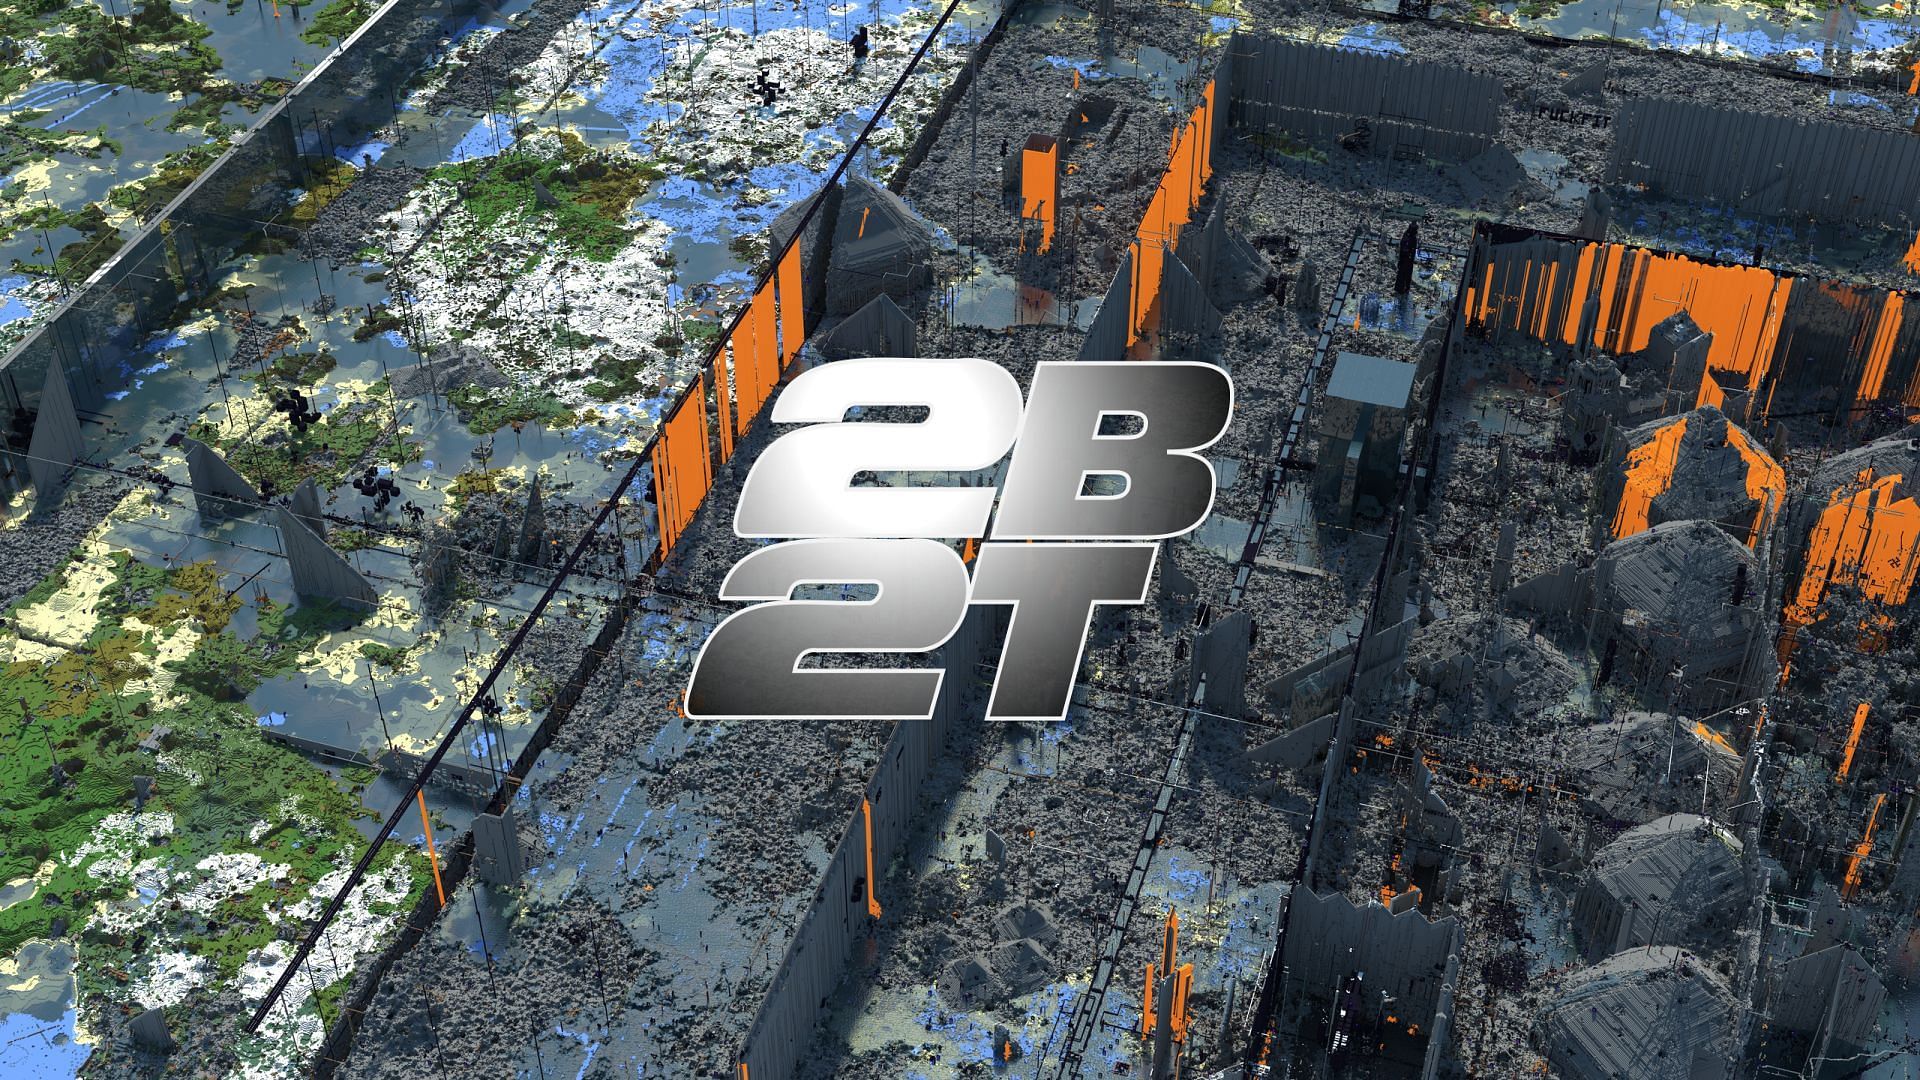 2b2t has finally been updated to Minecraft 1.19 (Image via Sportskeeda) 